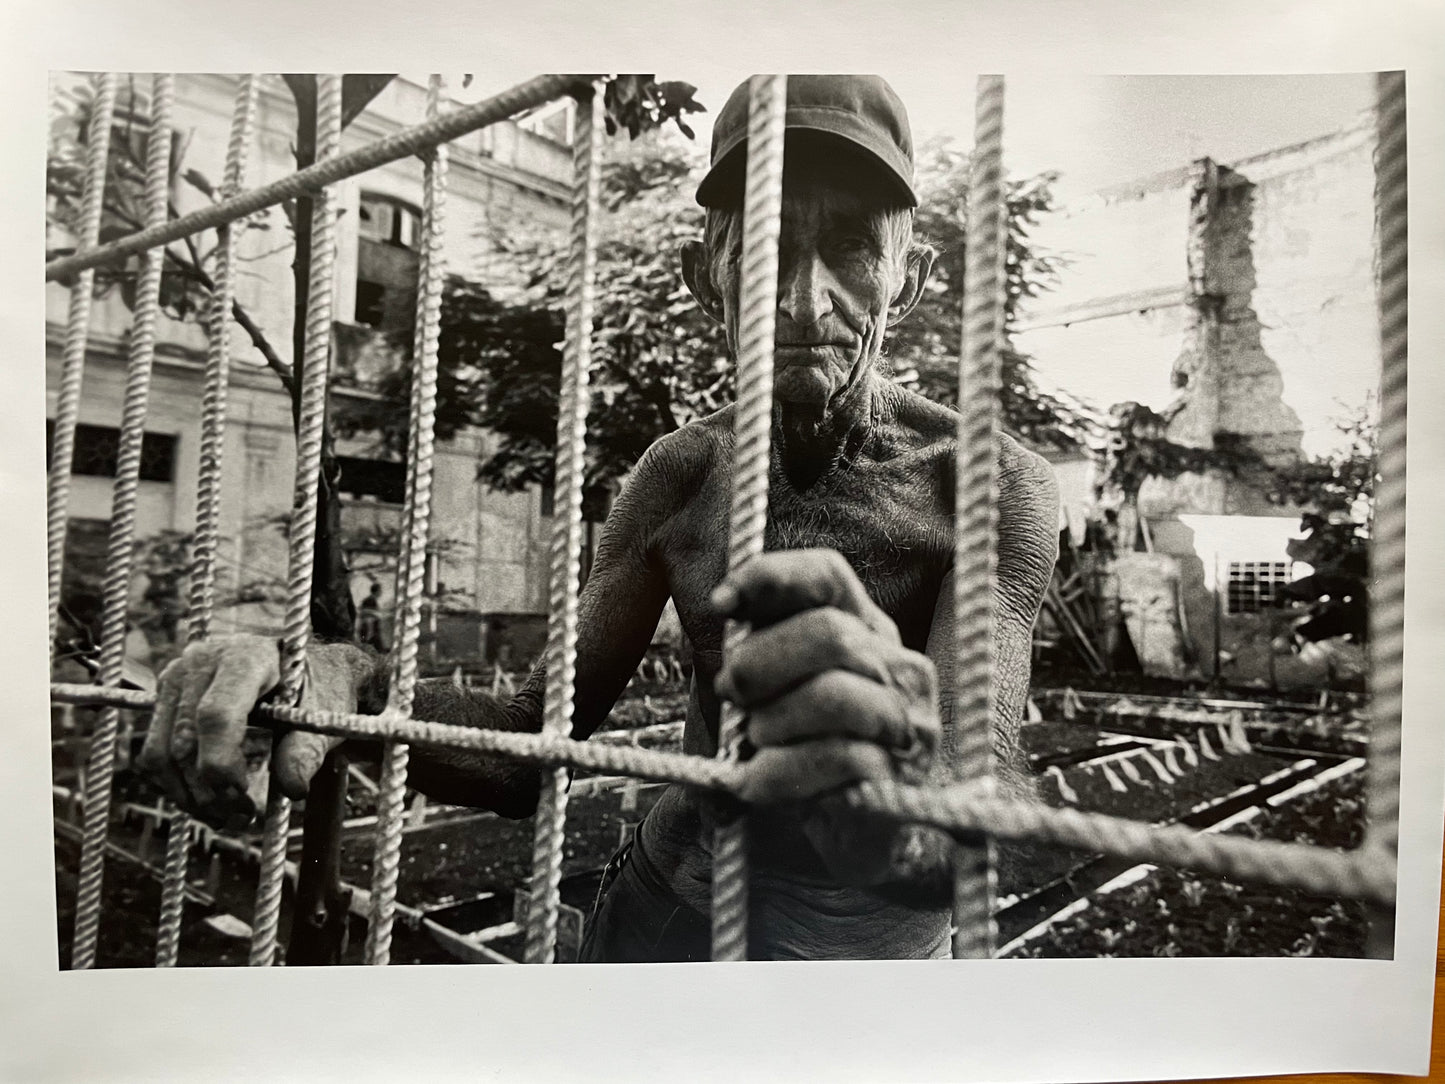 Susan S. Bank (American, 20th c.) Cuba Photograph Print Piercing through the darkness 11x14